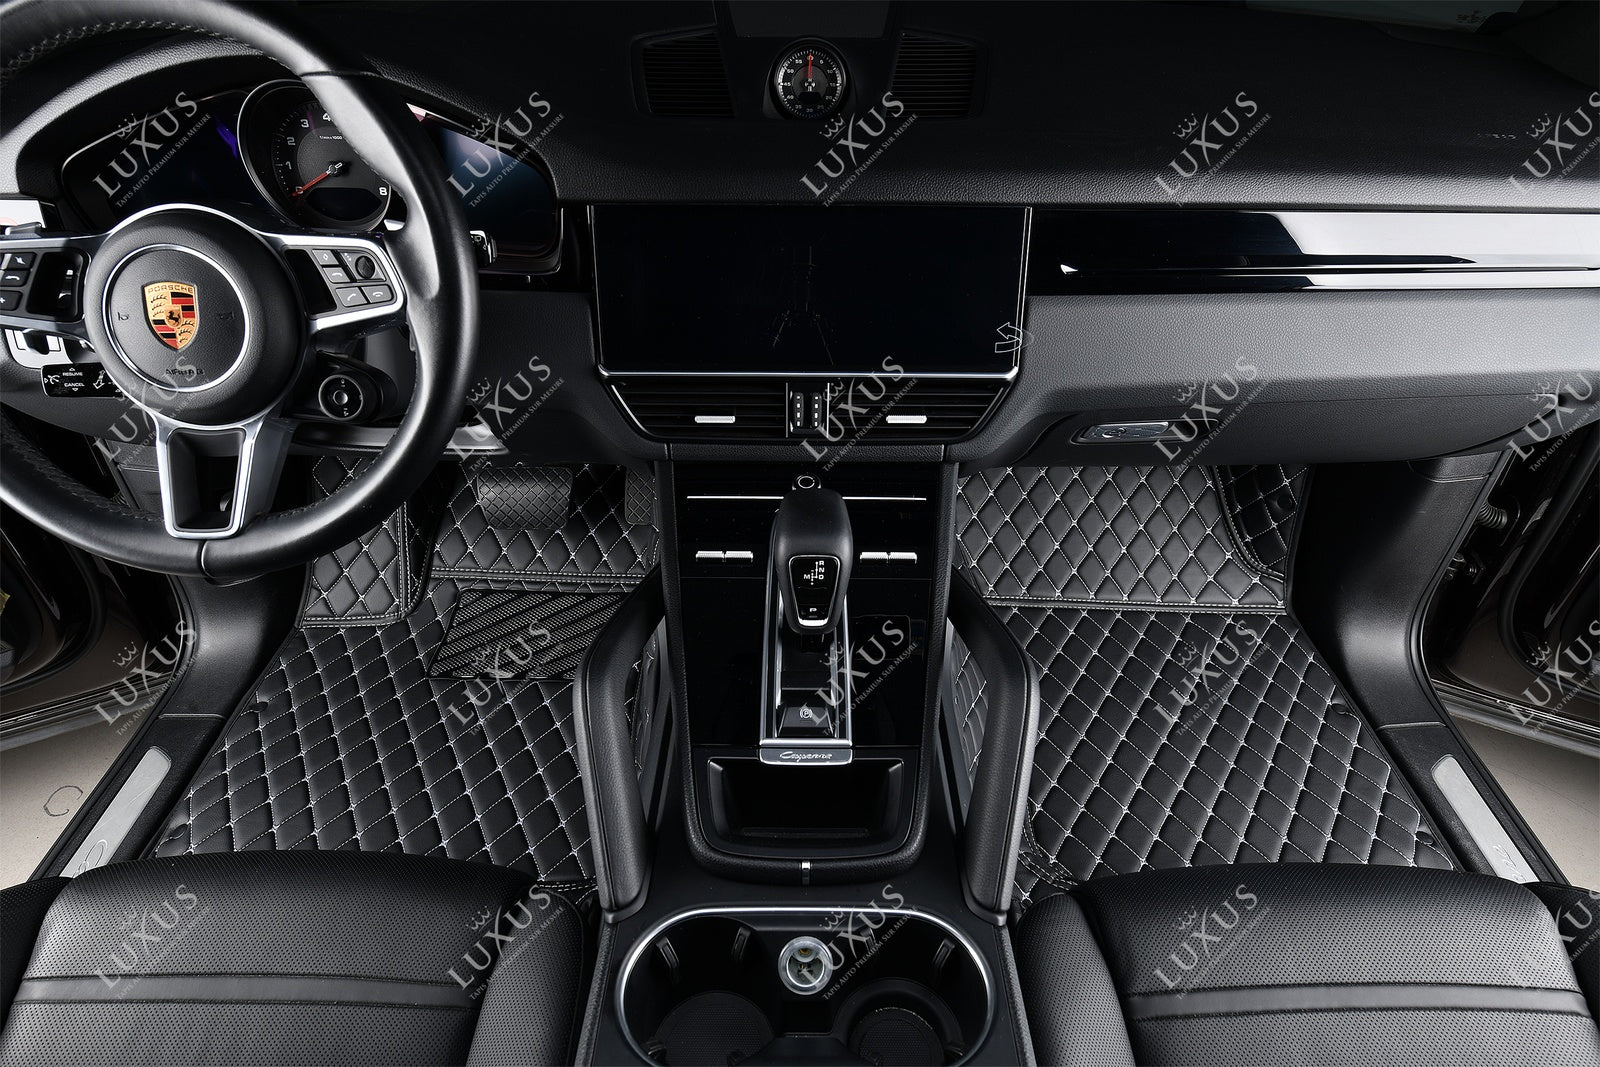 Luxus Car Mats™ - Diamond Black Series